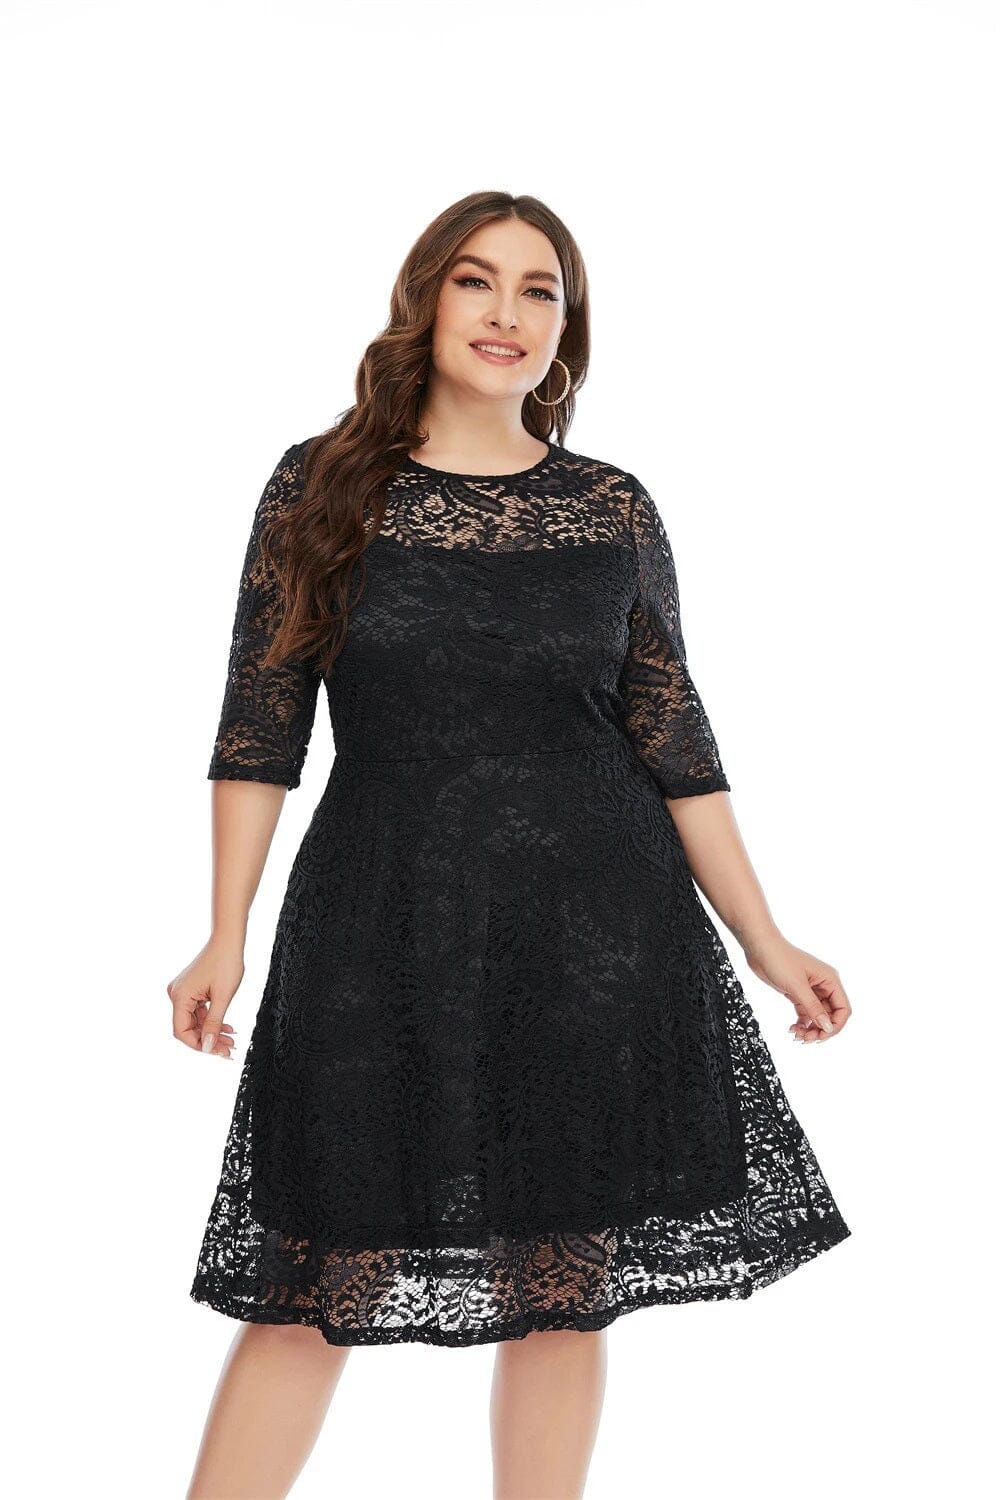 Women Plus Size Lace Crew Neck 3/4 Sleeve High Waist Dress Dresses jehouze Black XL 